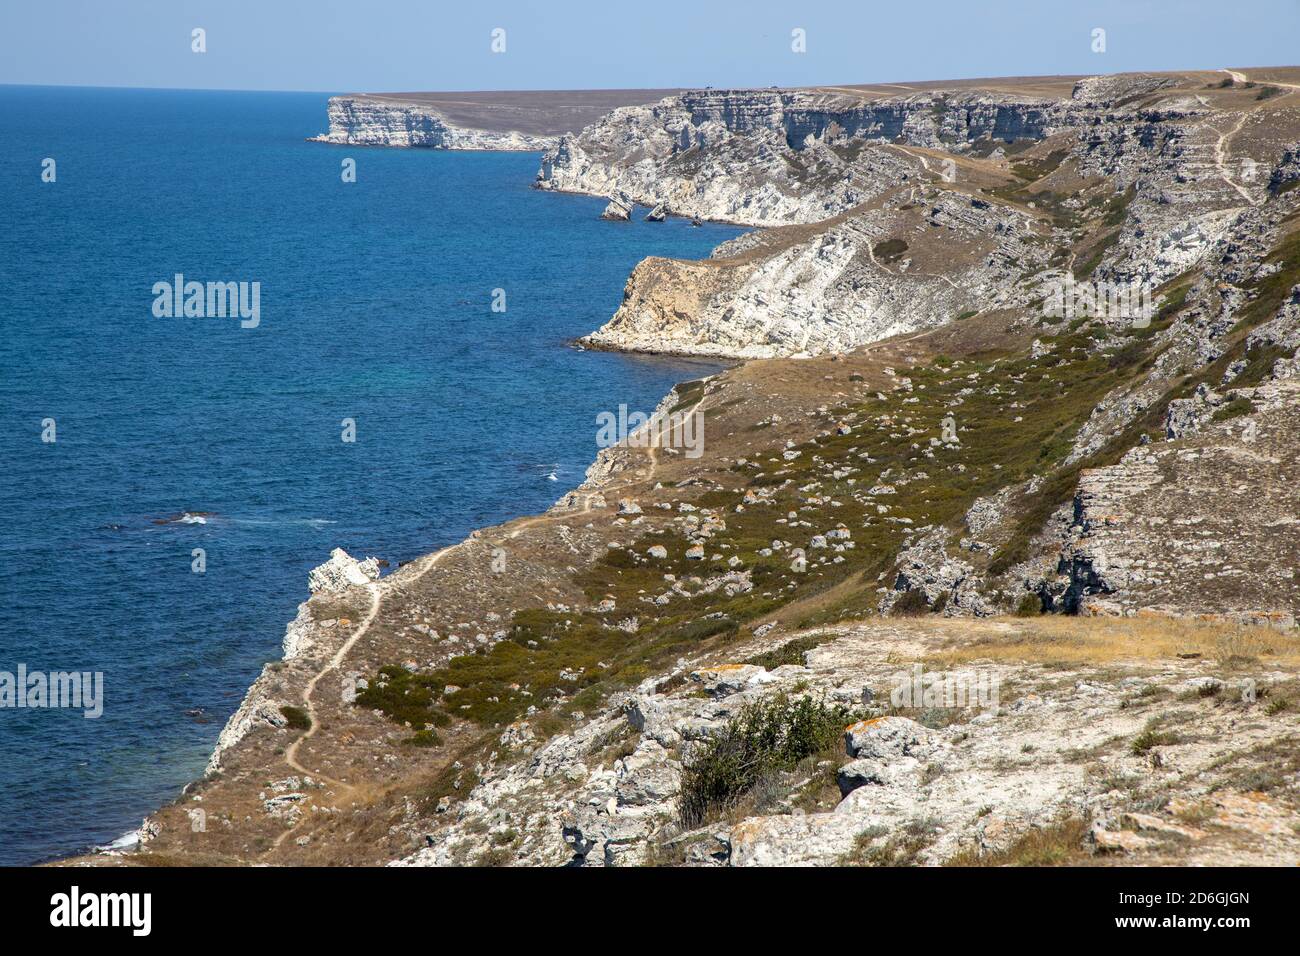 Scintillate sea surface and evening summer rocky coastline ('Novyj Svit' reserve, 'Rhinoceros' cape, Crimea, Ukraine). Six shots stitch image. Stock Photo